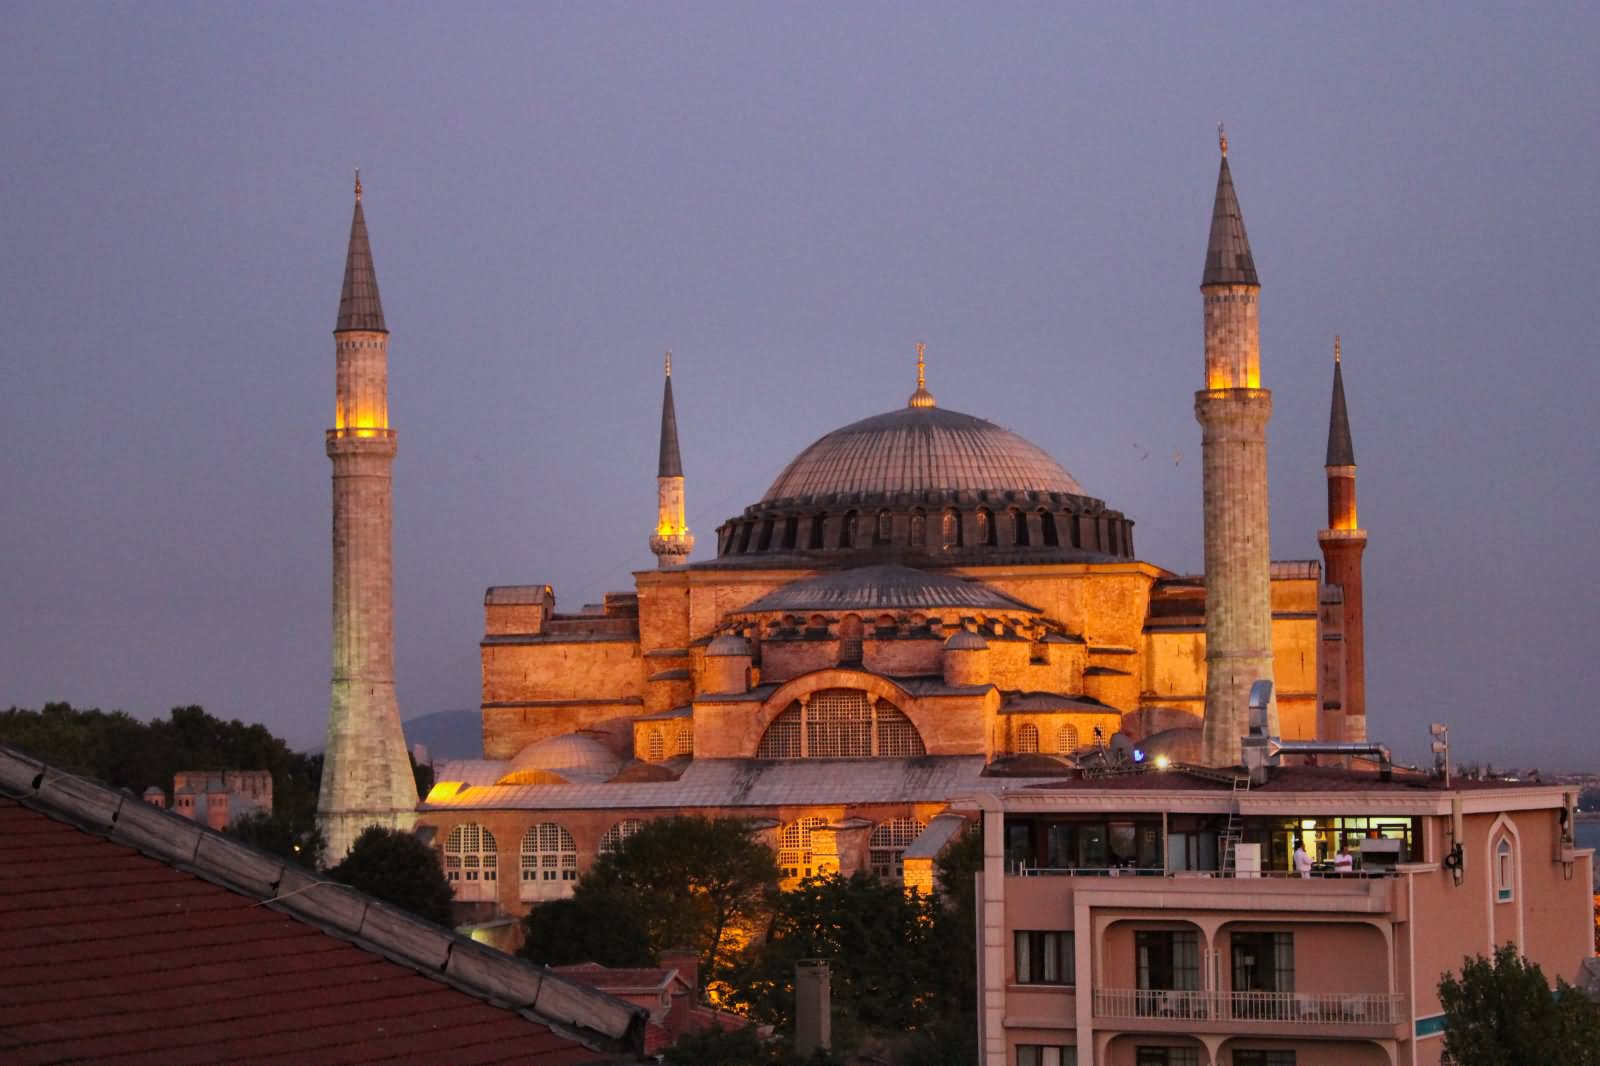 The Beautiful Hagia Sophia Lit Up At Night